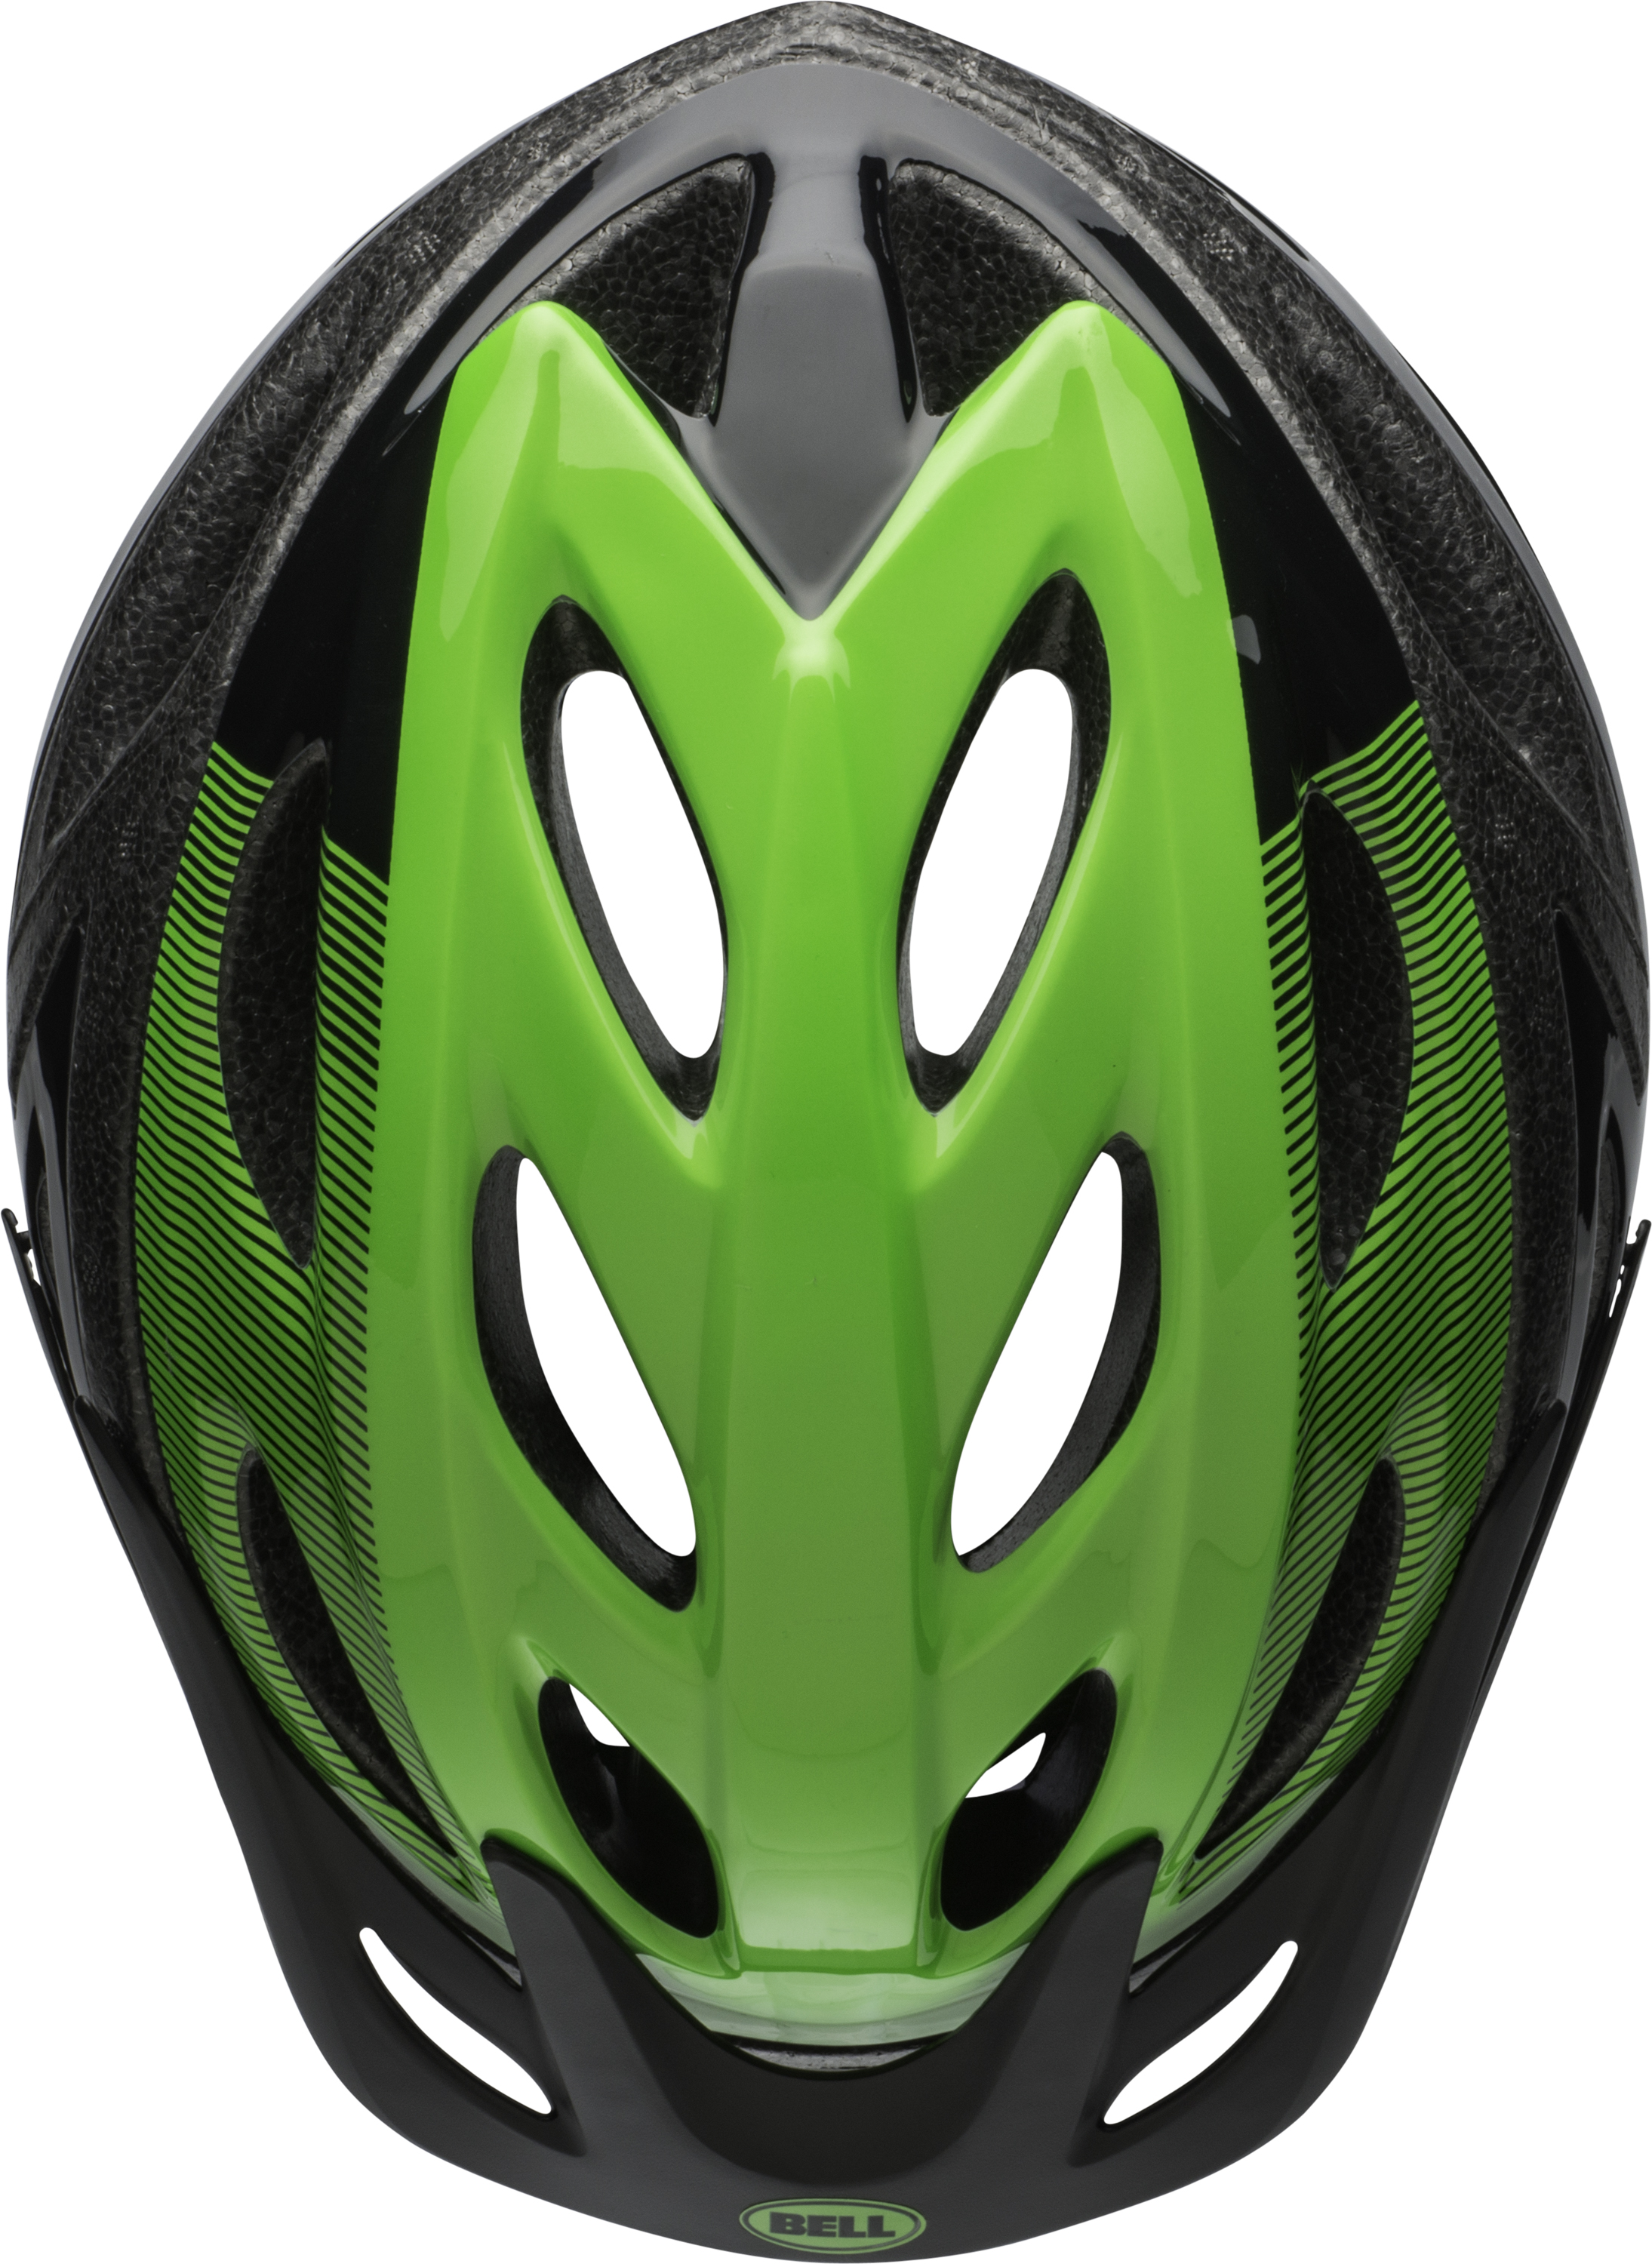 Bell Axle Bike Helmet, Black/Green, Adult 14+ (54-61cm) - image 2 of 9